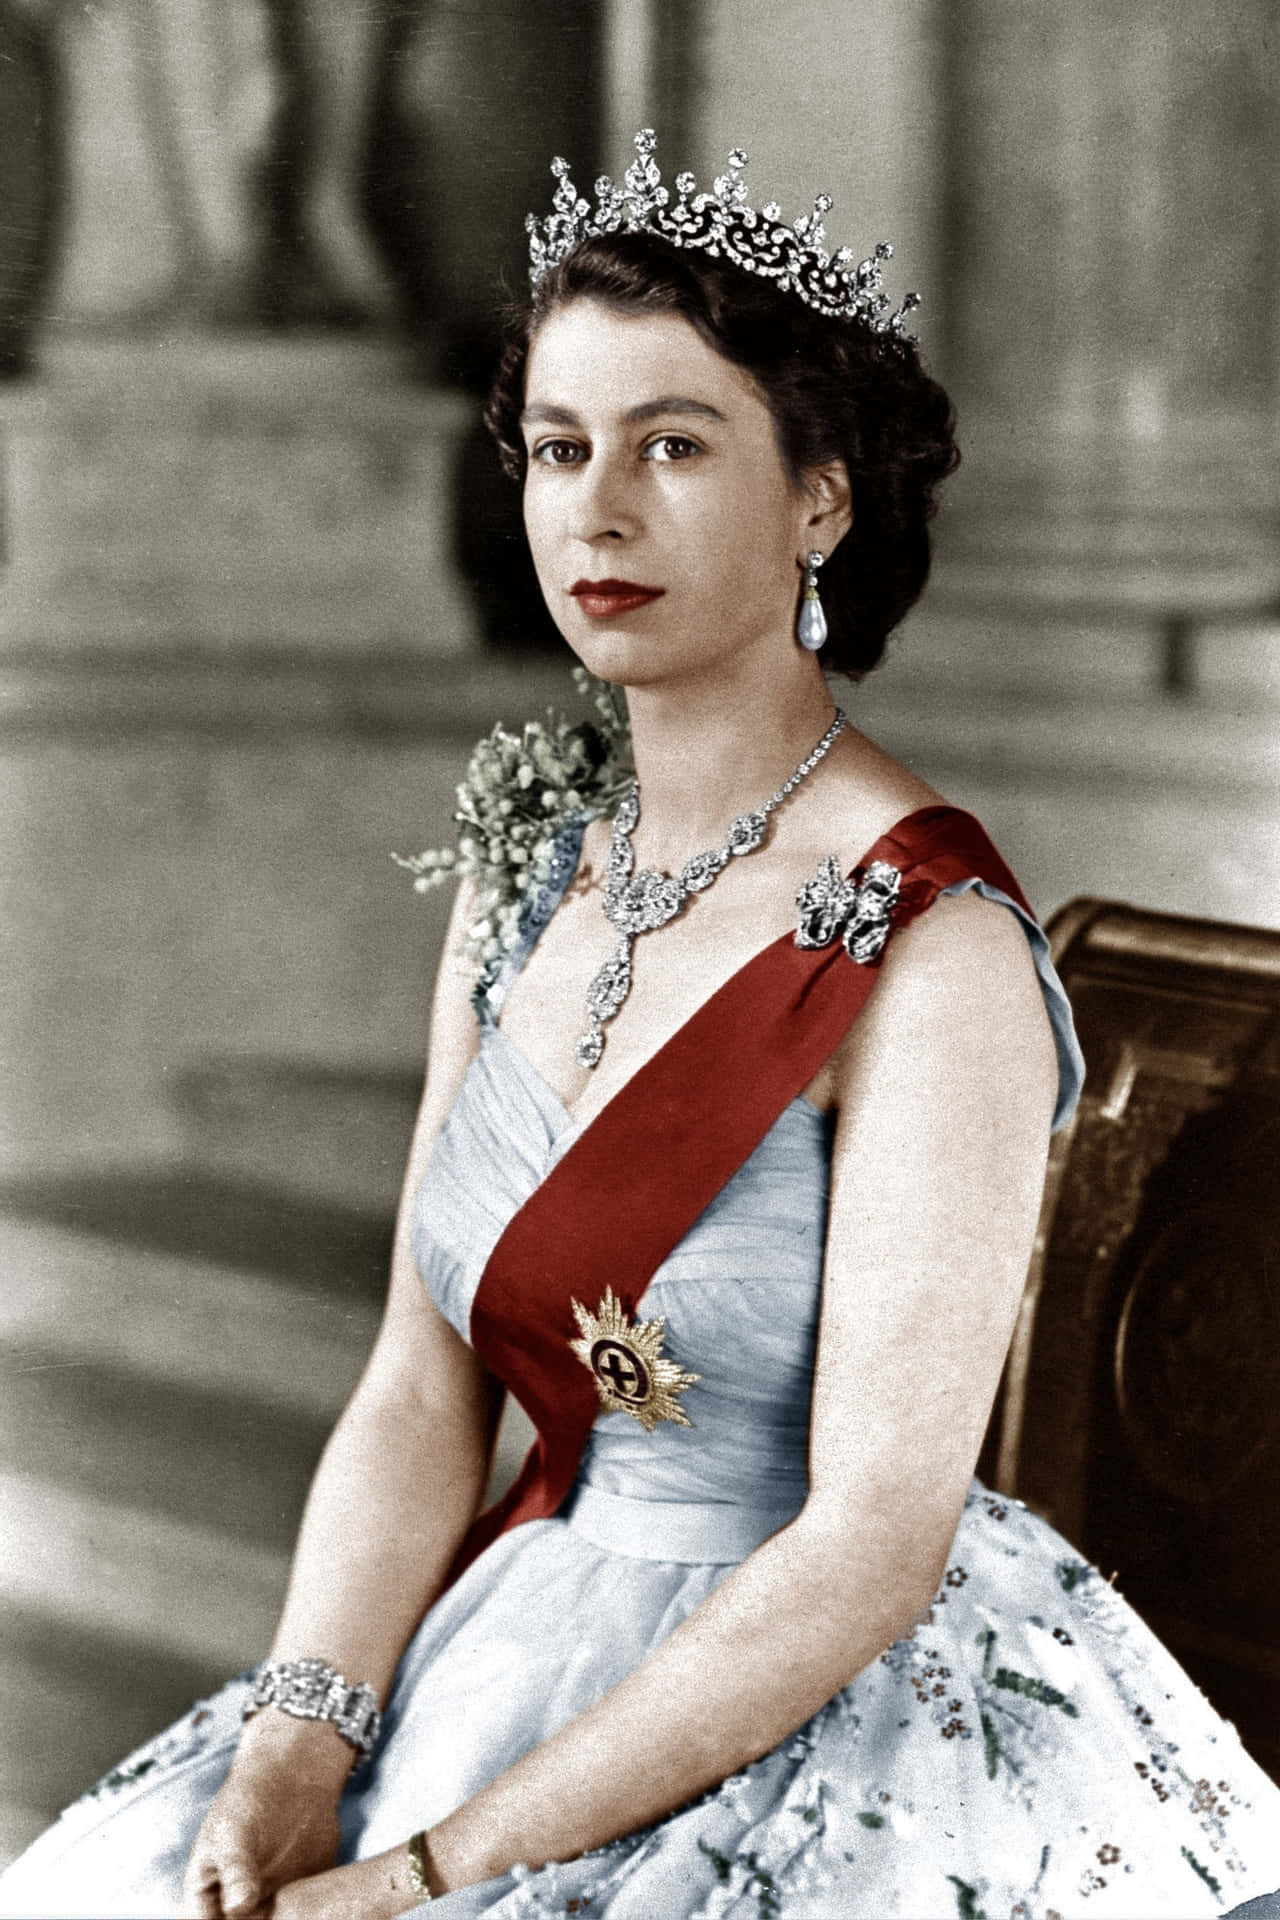 Sumajestad La Reina Isabel Ii Vestida Con Prendas Regias.